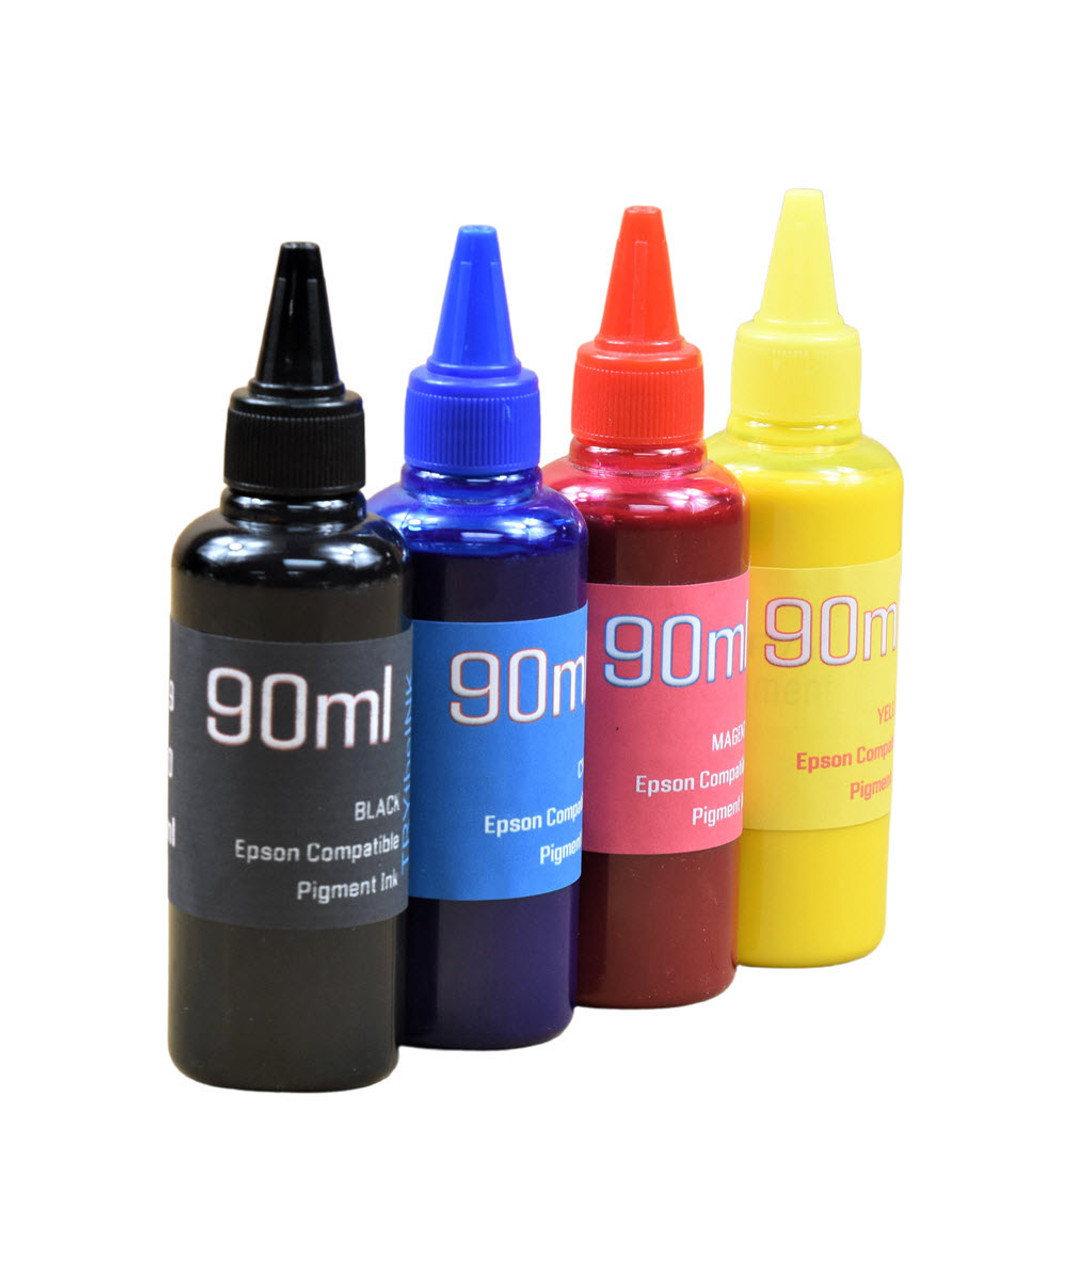 4 -90ml bottles Pigment Ink for Epson WorkForce WF-3540, WorkForce WF-7010, WorkForce WF-7510, WorkForce WF-7520 Printers